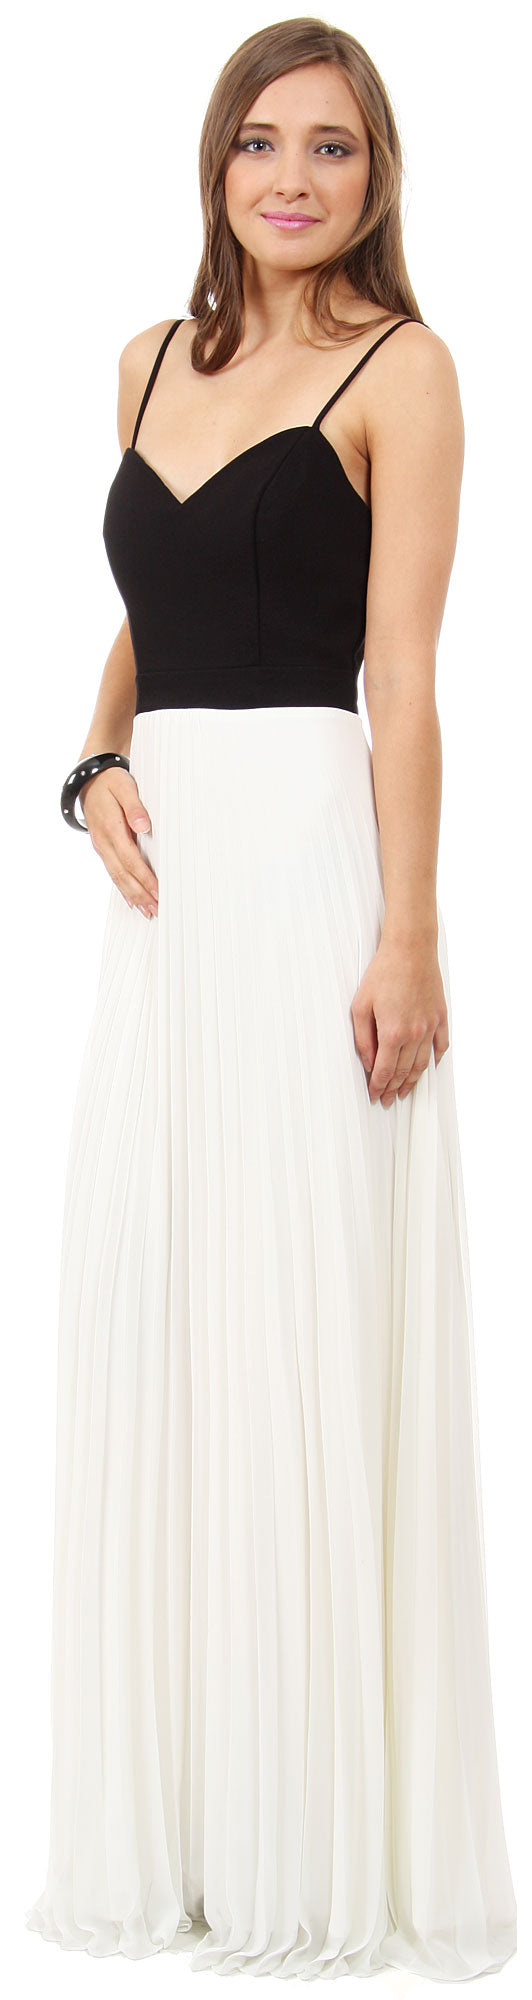 Main image of Spaghetti Straps Pleated Skirt Long Formal Bridesmaid Dress